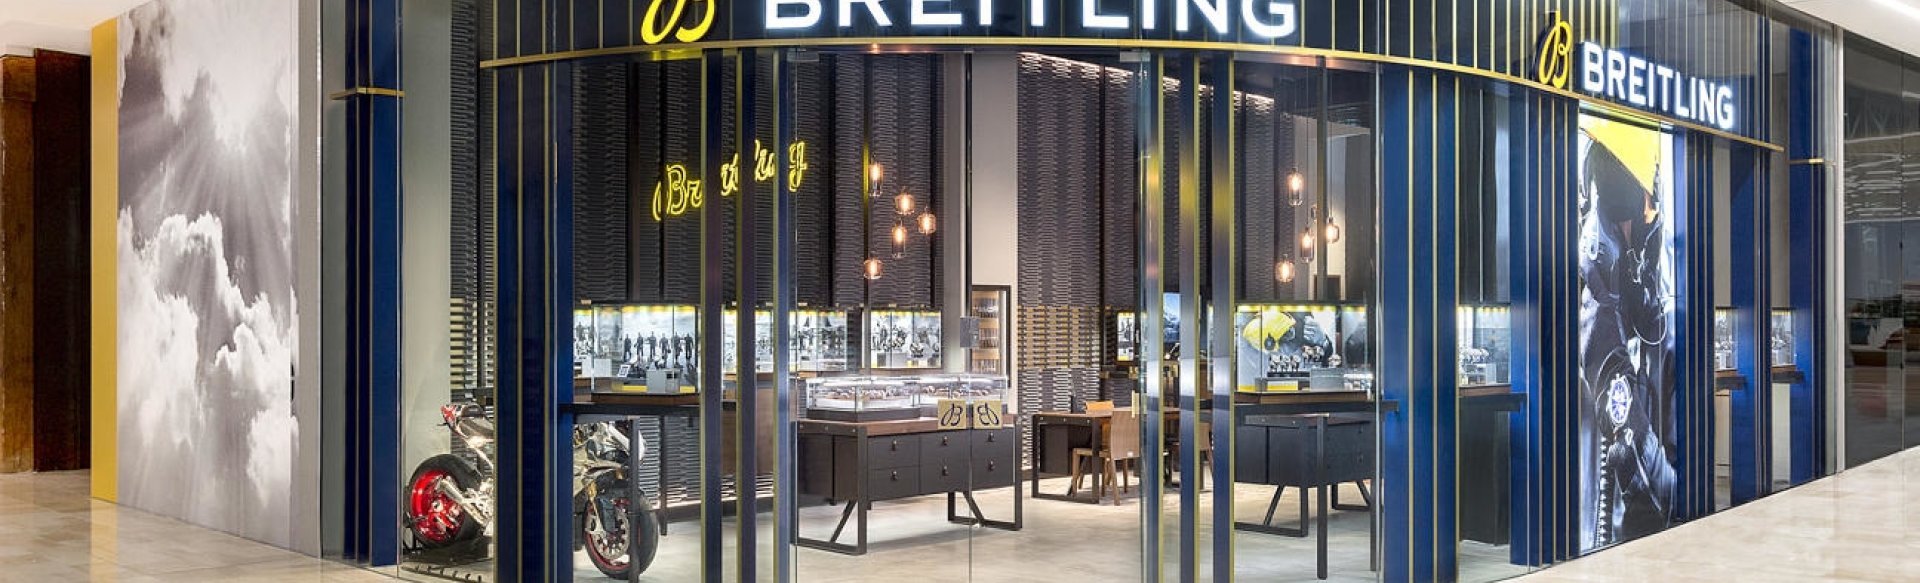 Breitling Boutique London White City